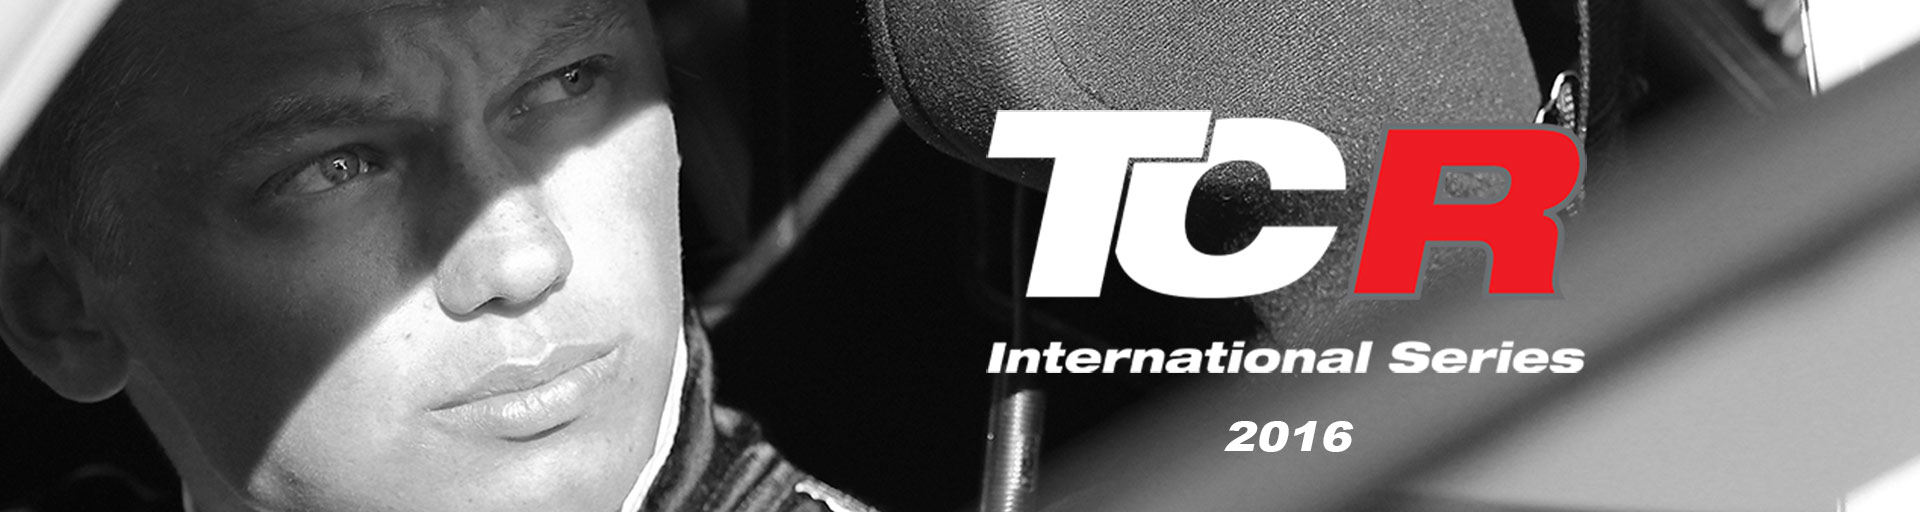 Mato Homola goes big – he joins TCR International Series!